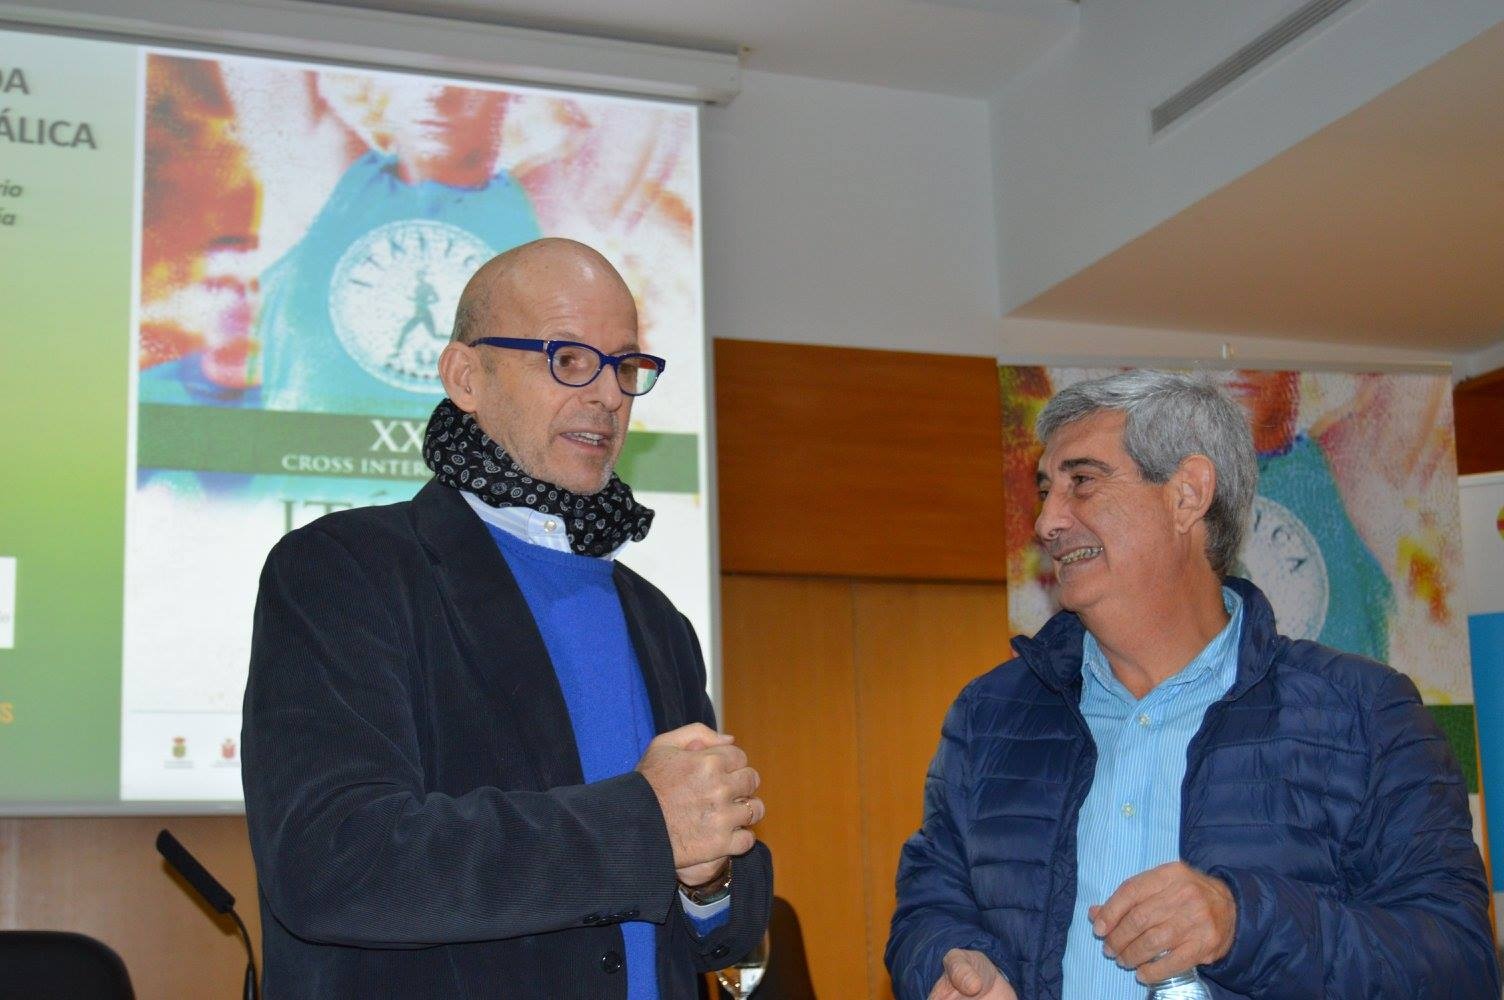 Jose Antonio Muñoz "Anchoa" en Jornadas Técnicas Cross Itálica 2017